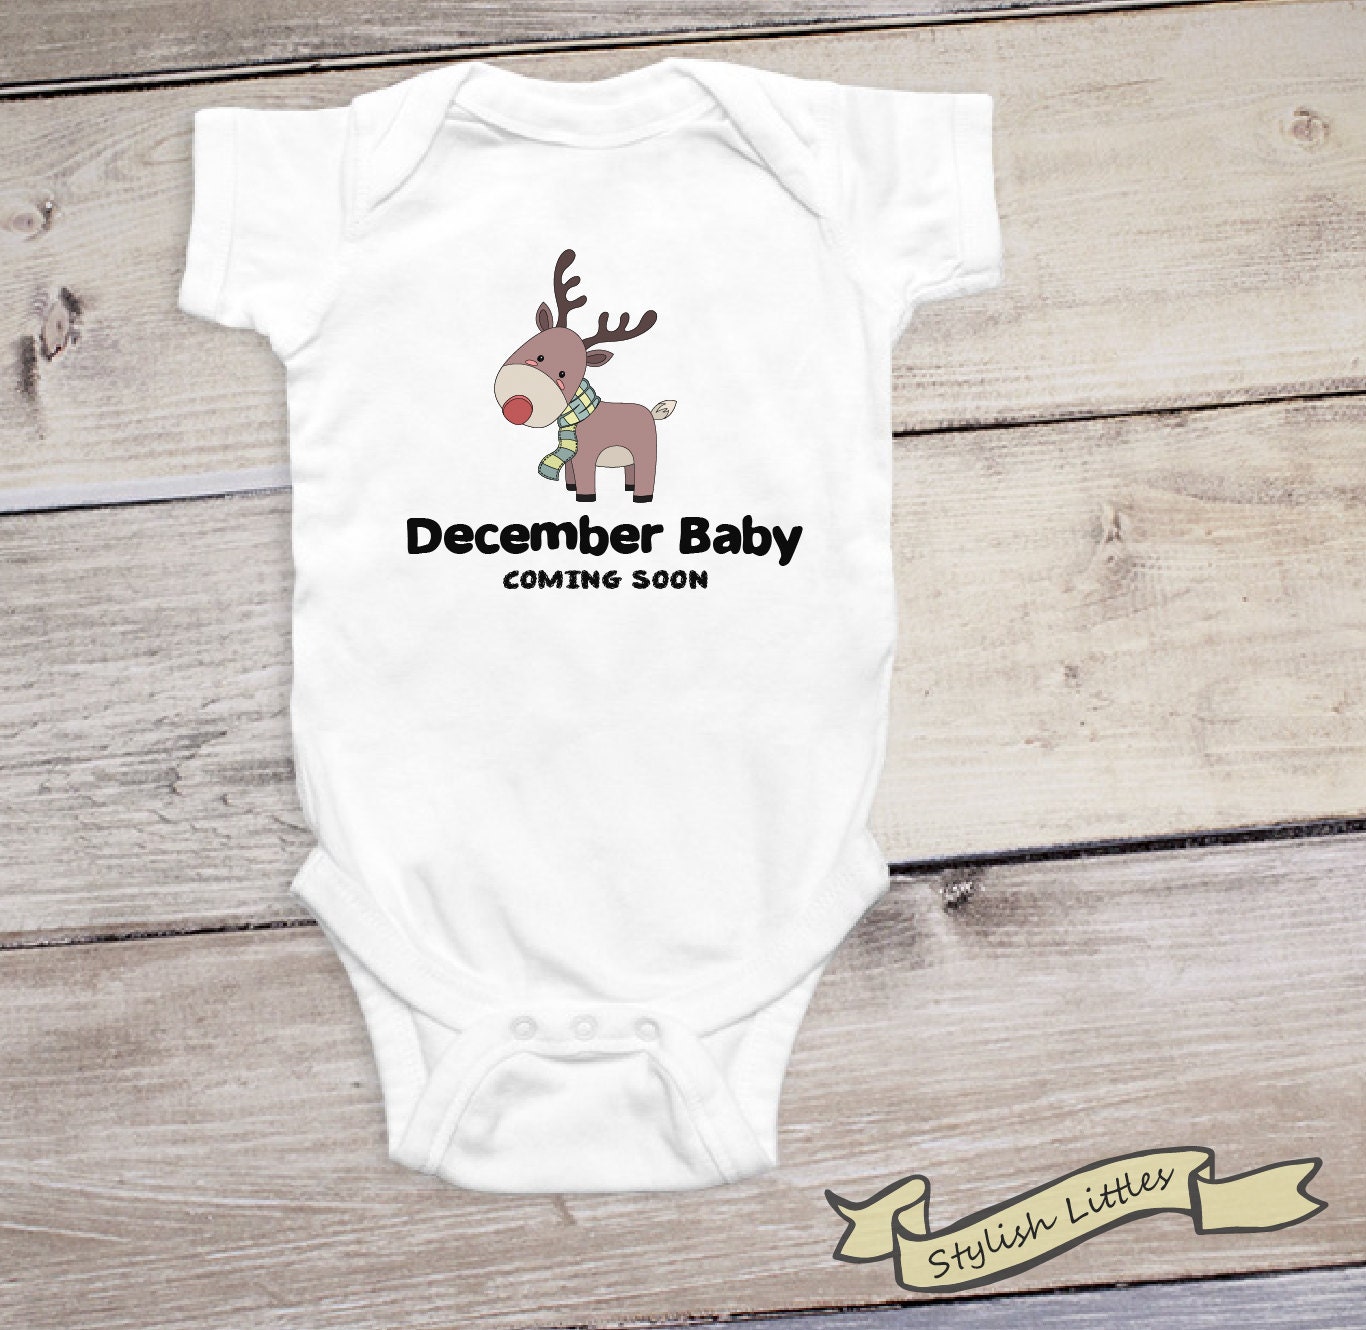 Pregnancy Announcement Onesie® December Baby Reveal Baby1366 x 1330